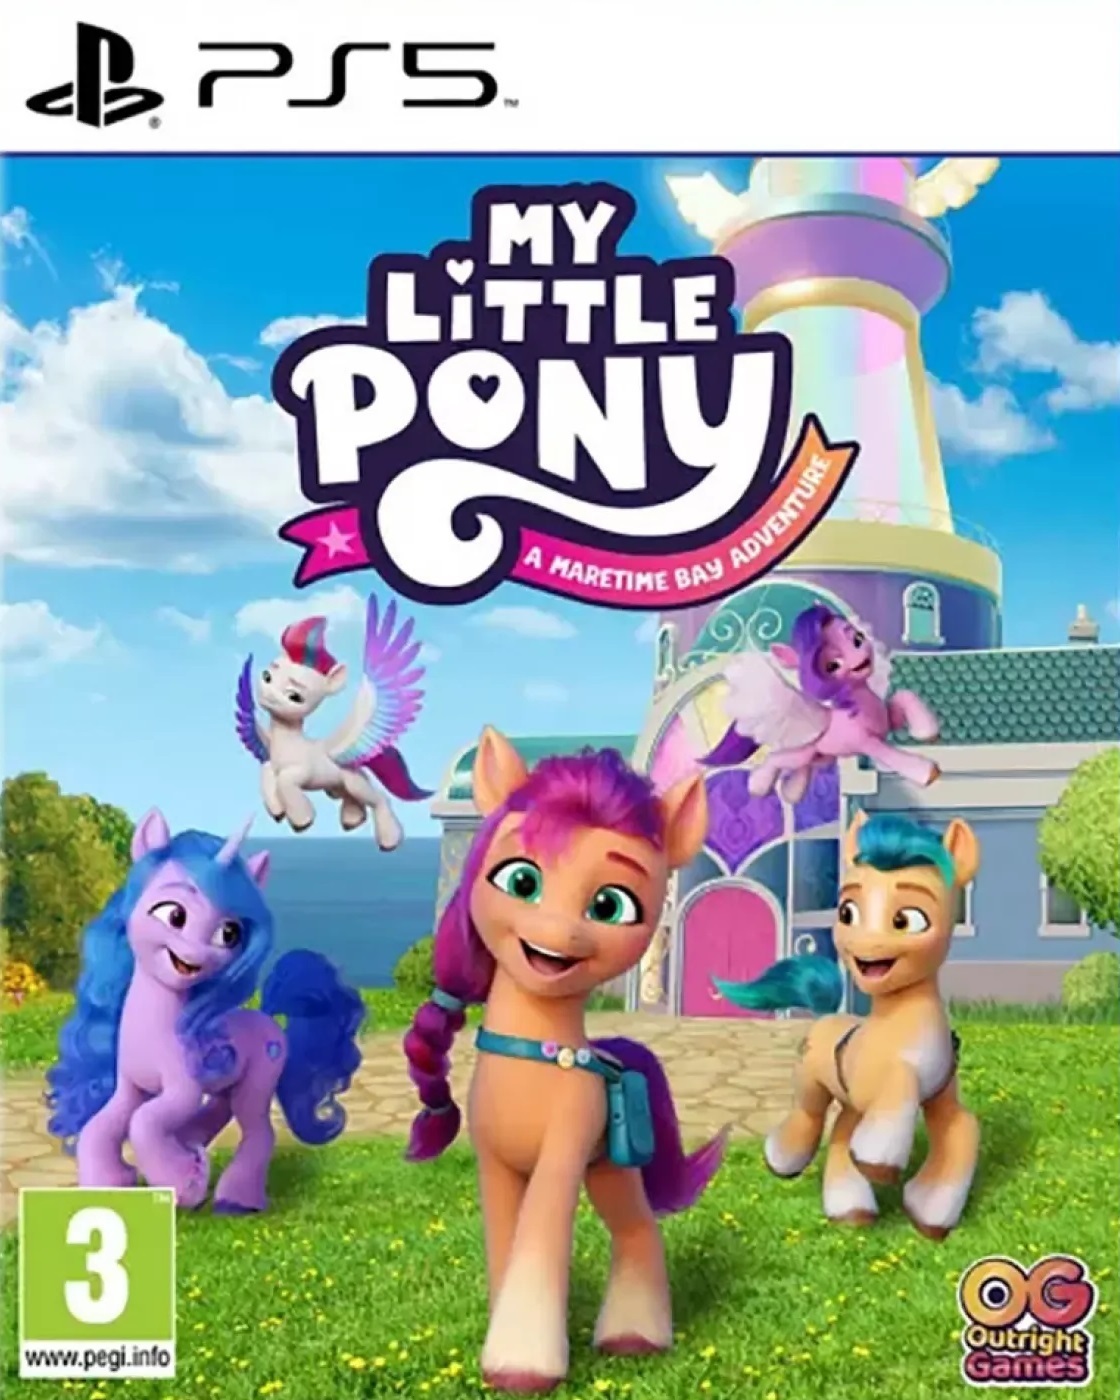 Pony: PlayStation GameFAQs Box Maretime My Bay A - 5 Little Shot Adventure for